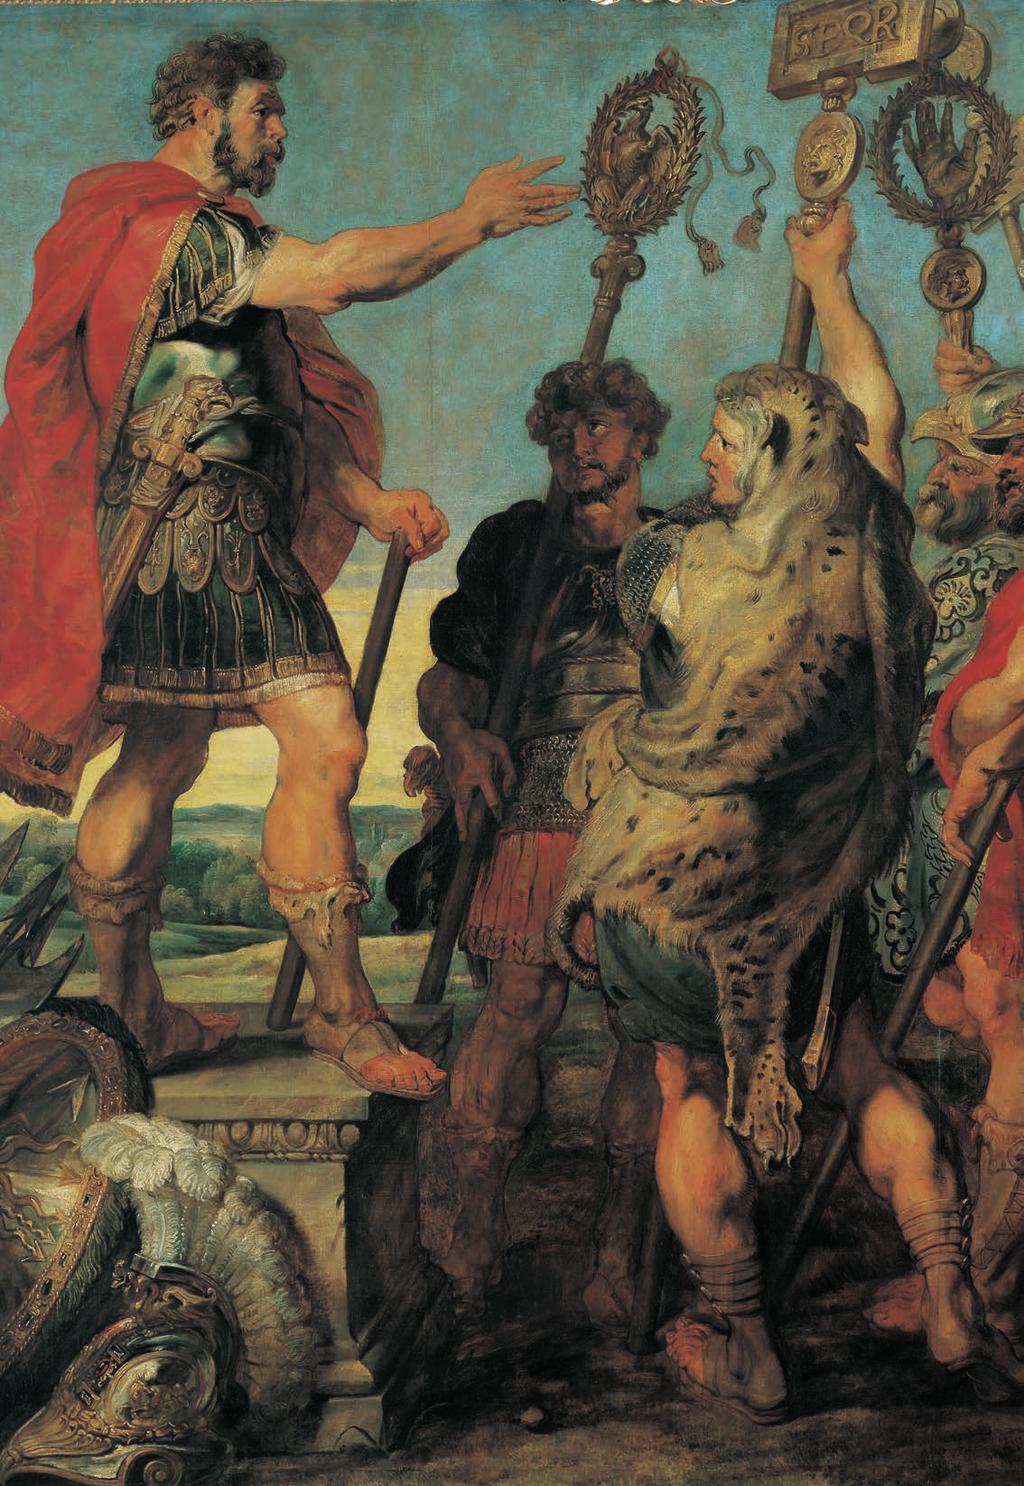 Peter Paul Rubens, detail from